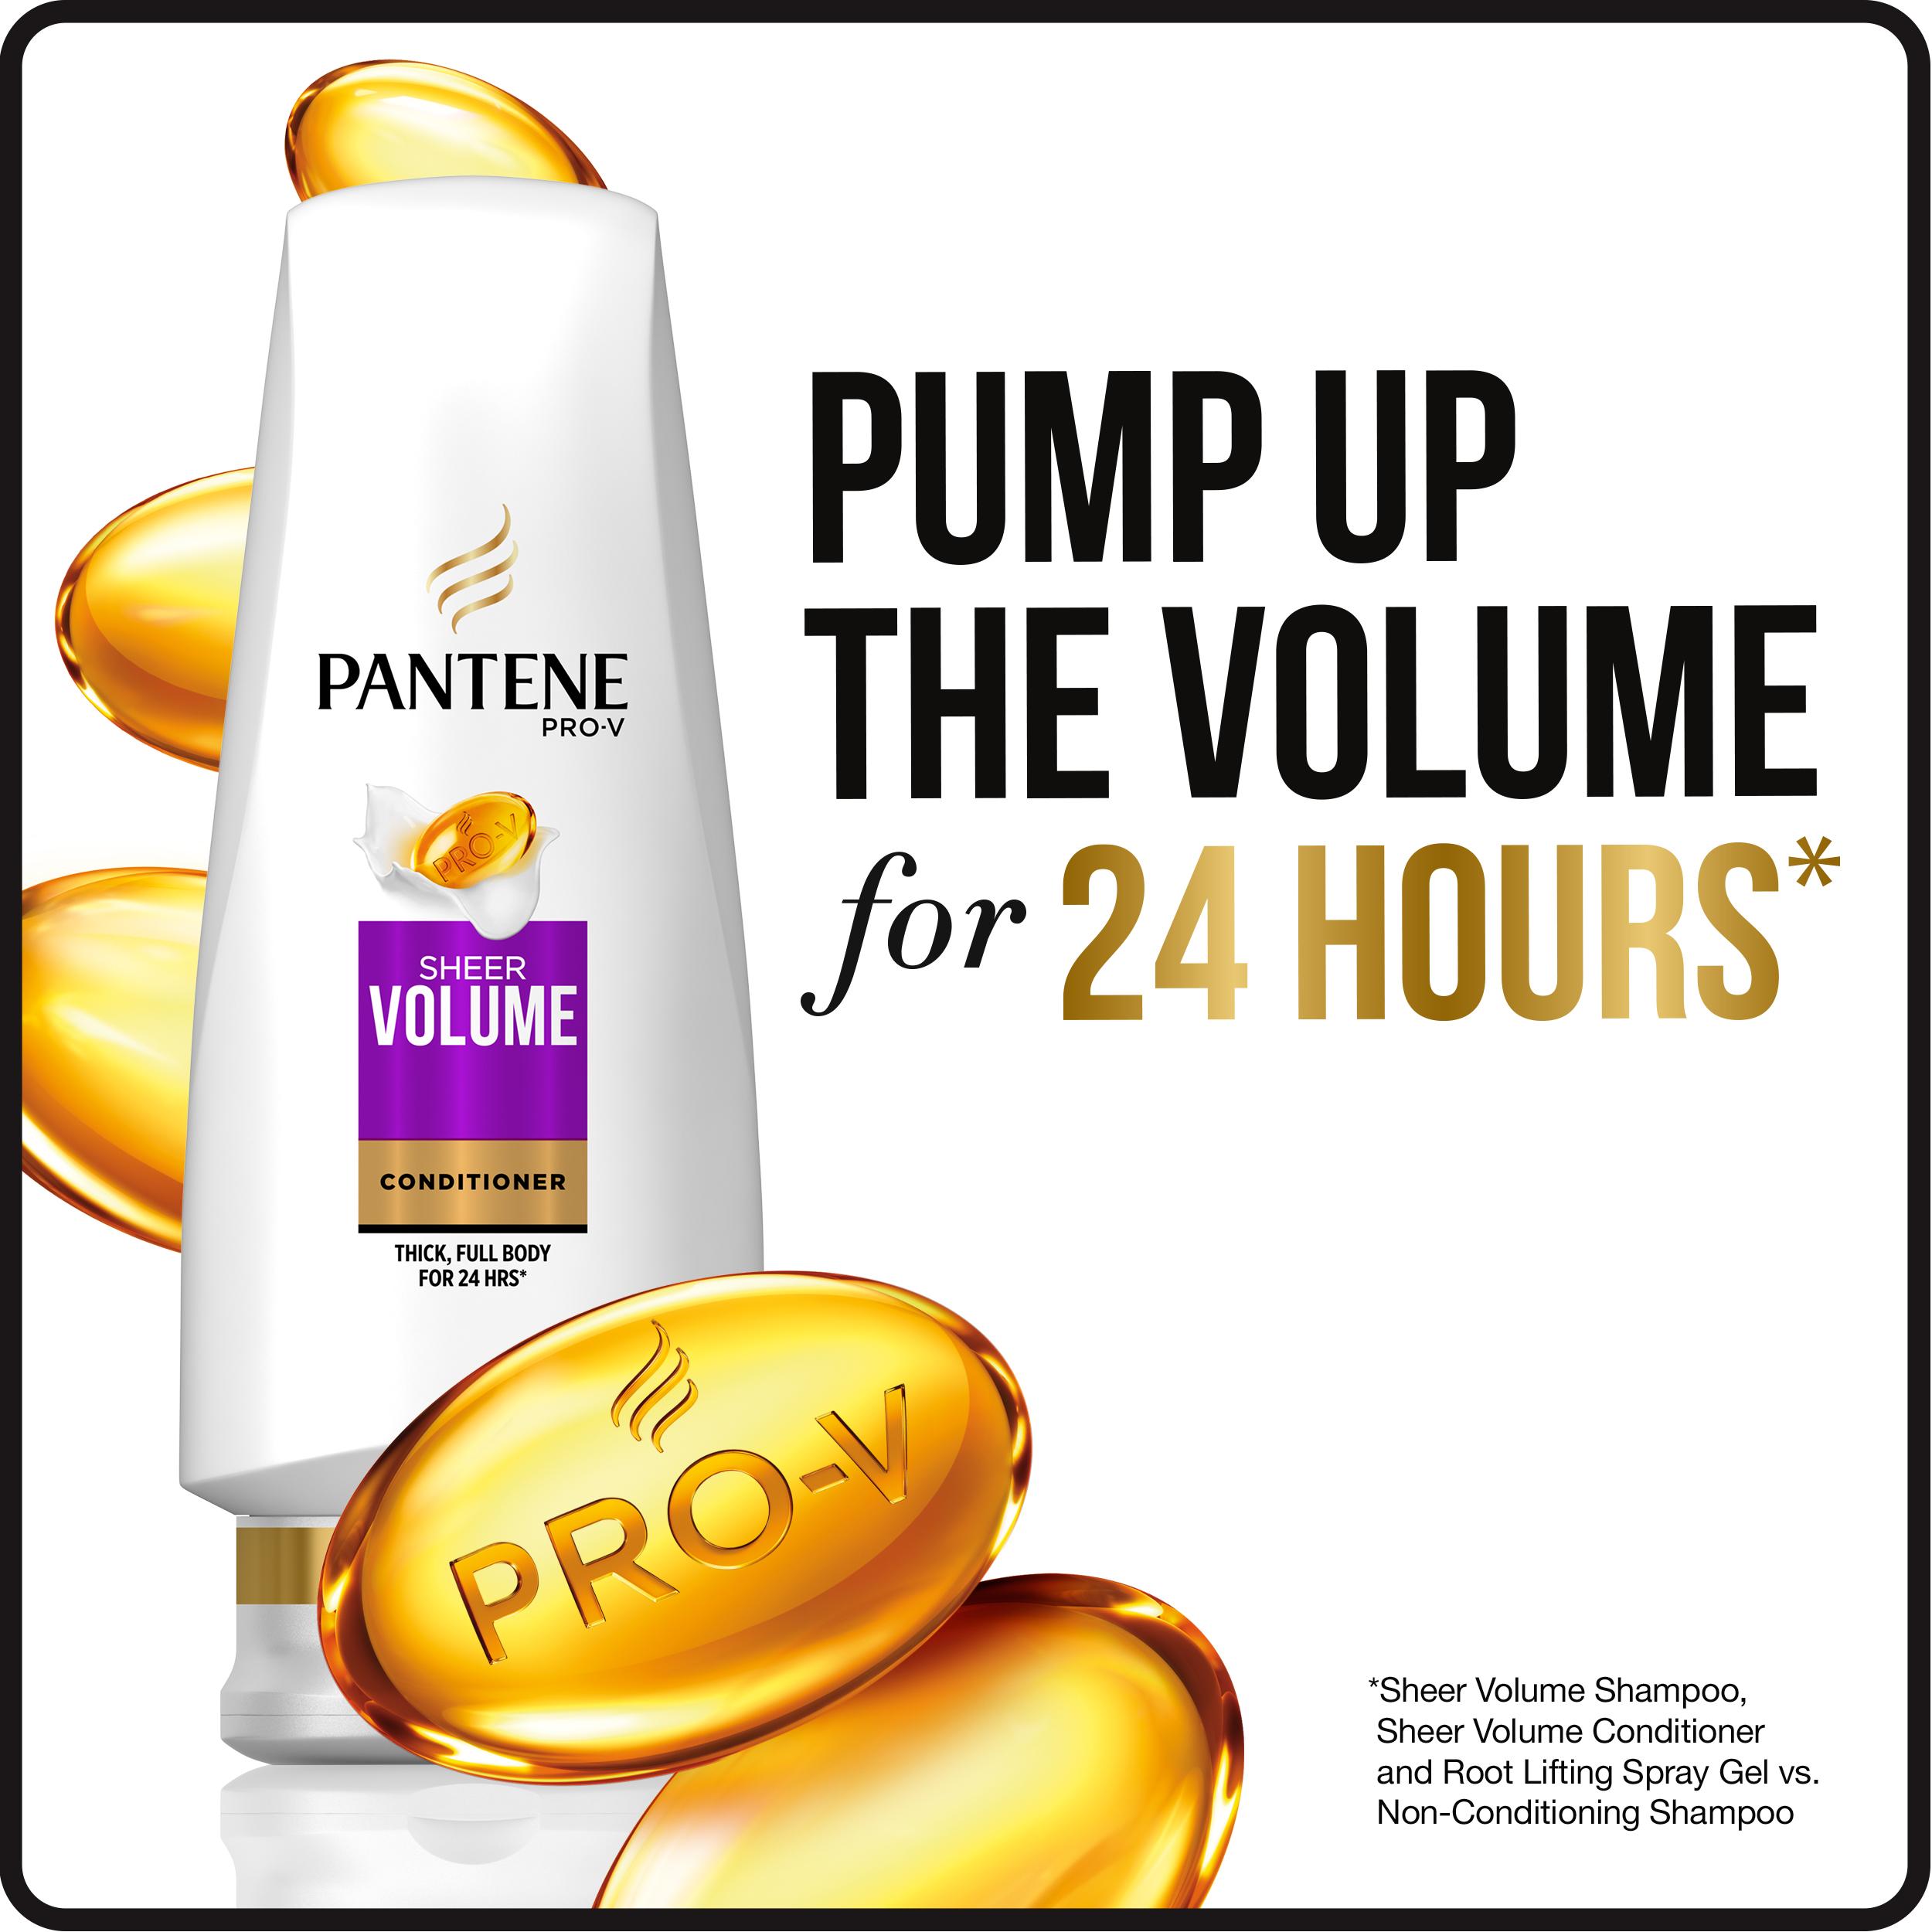 Pantene Pro-V Moisturizing nourishing Sheer Volume for Thin Hair Daily Conditioner, 28.9 fl oz - image 4 of 7